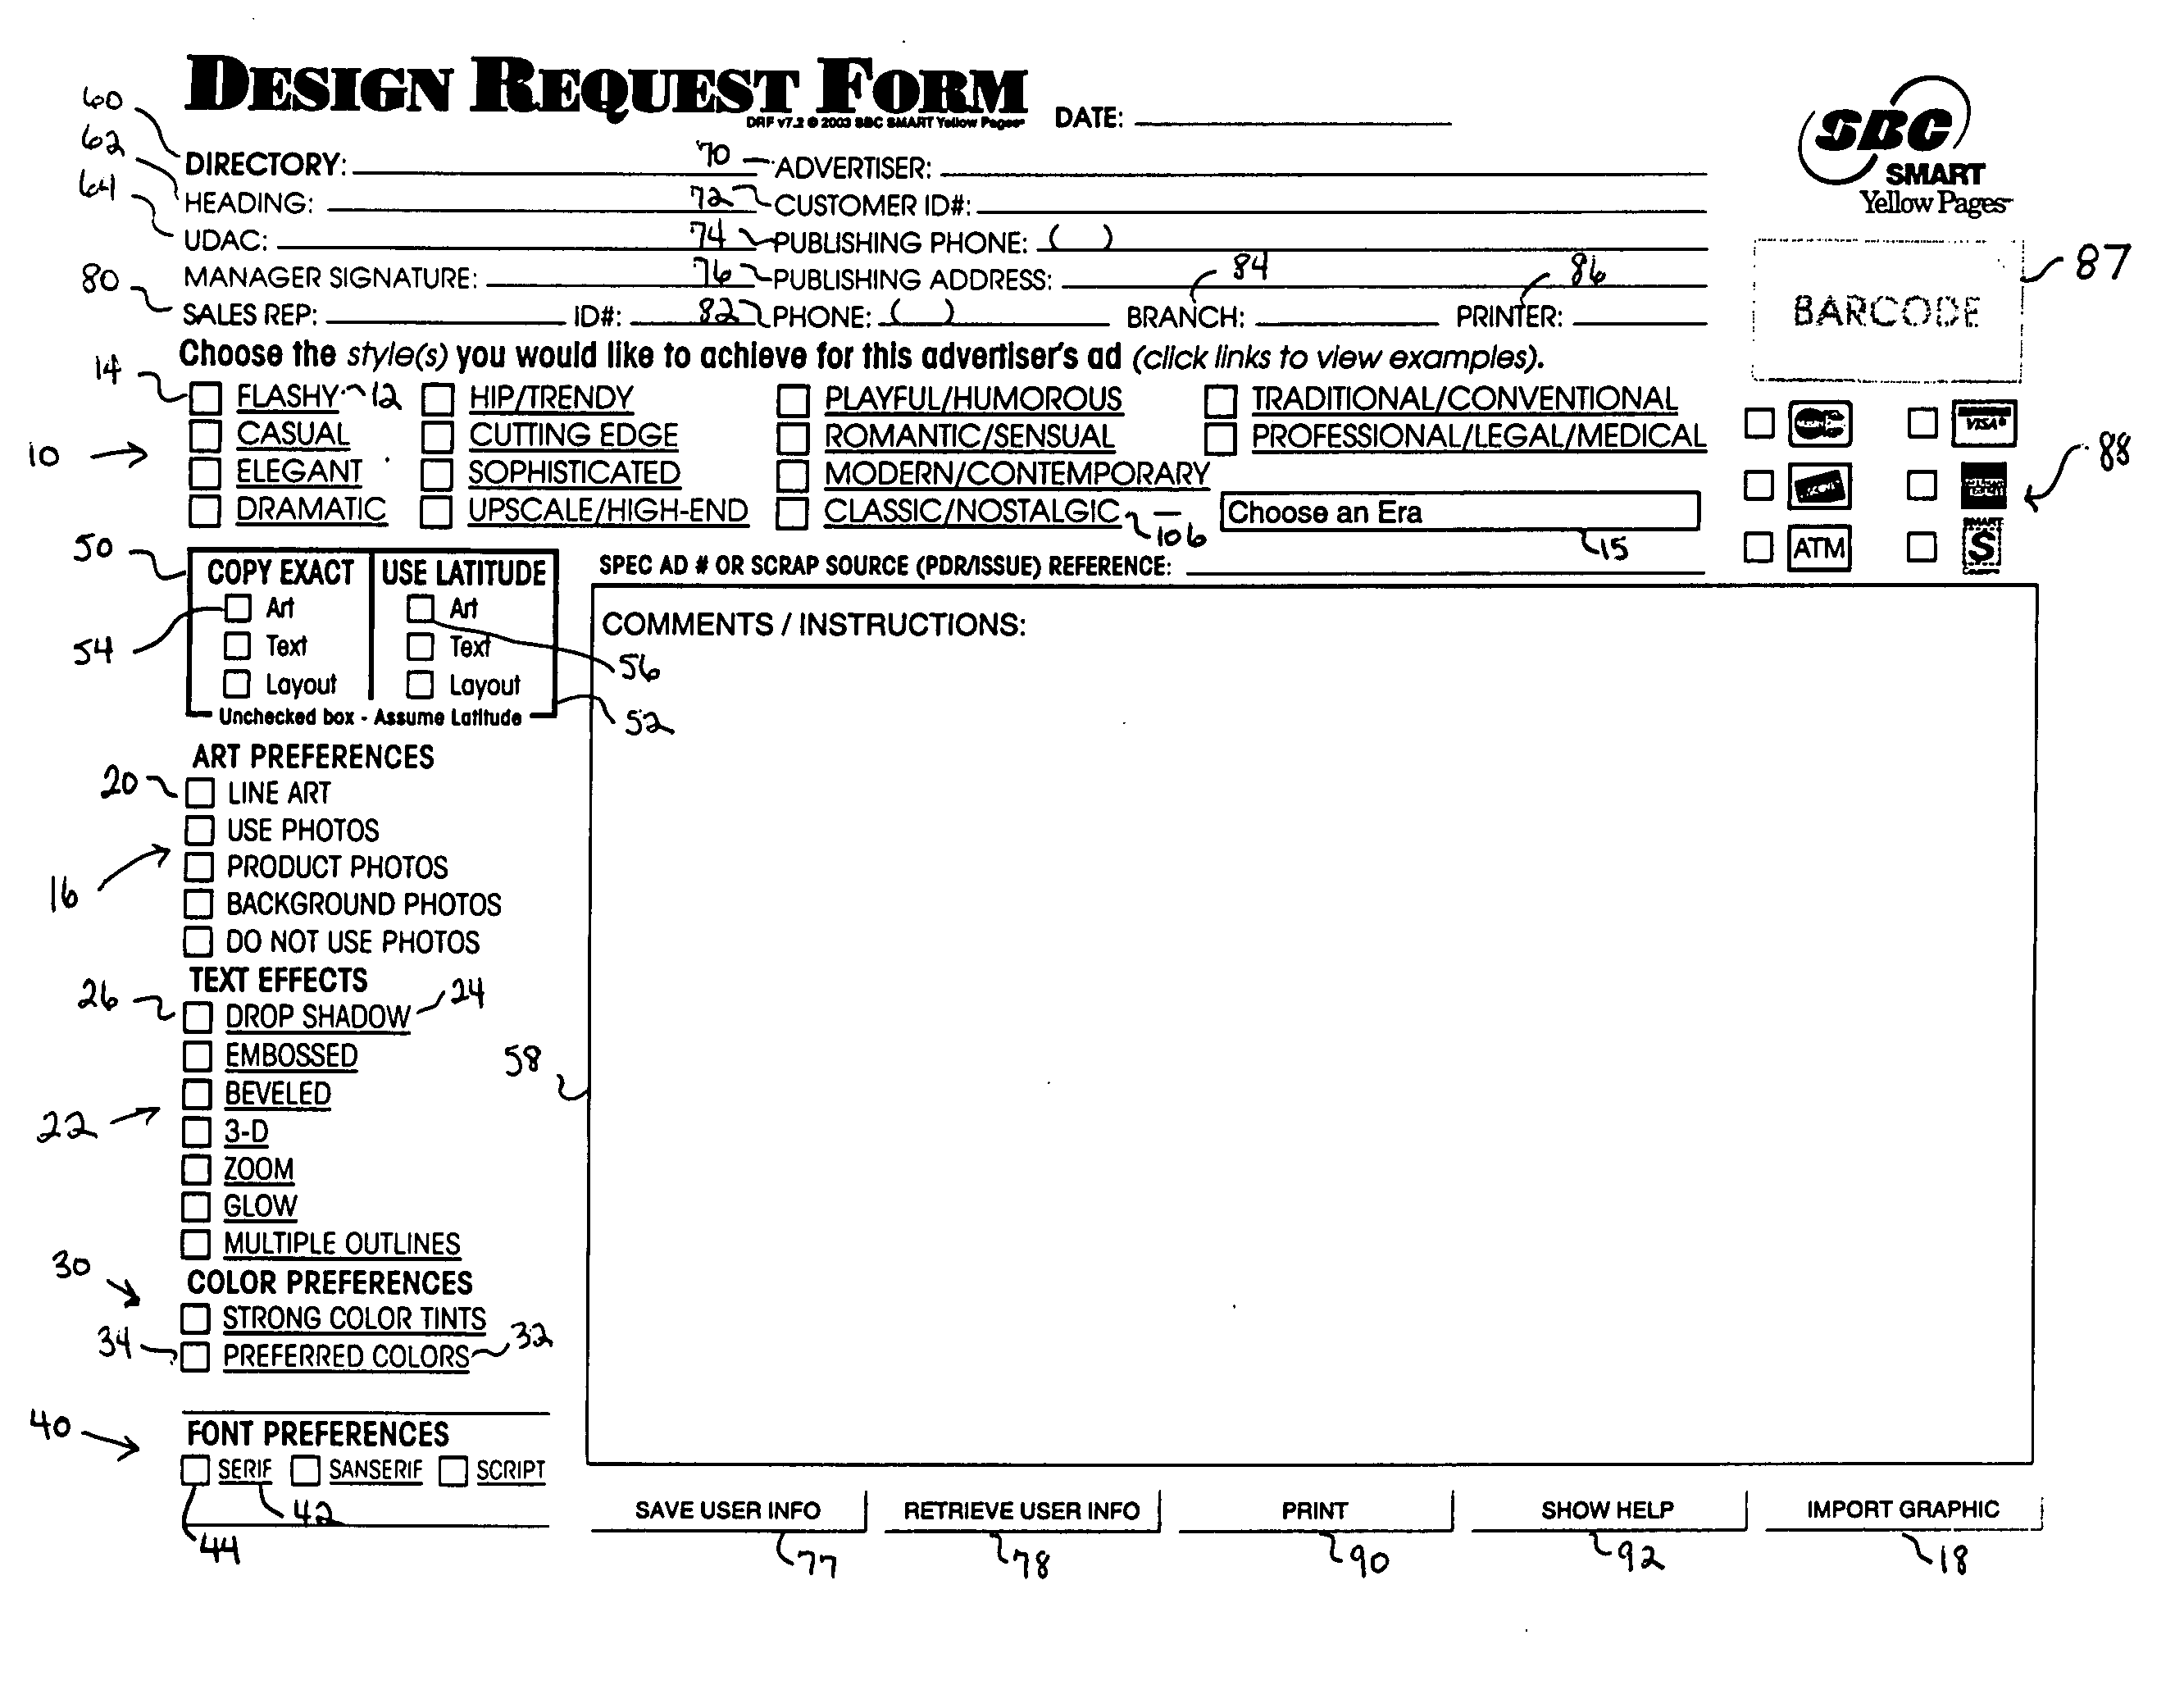 Design request form